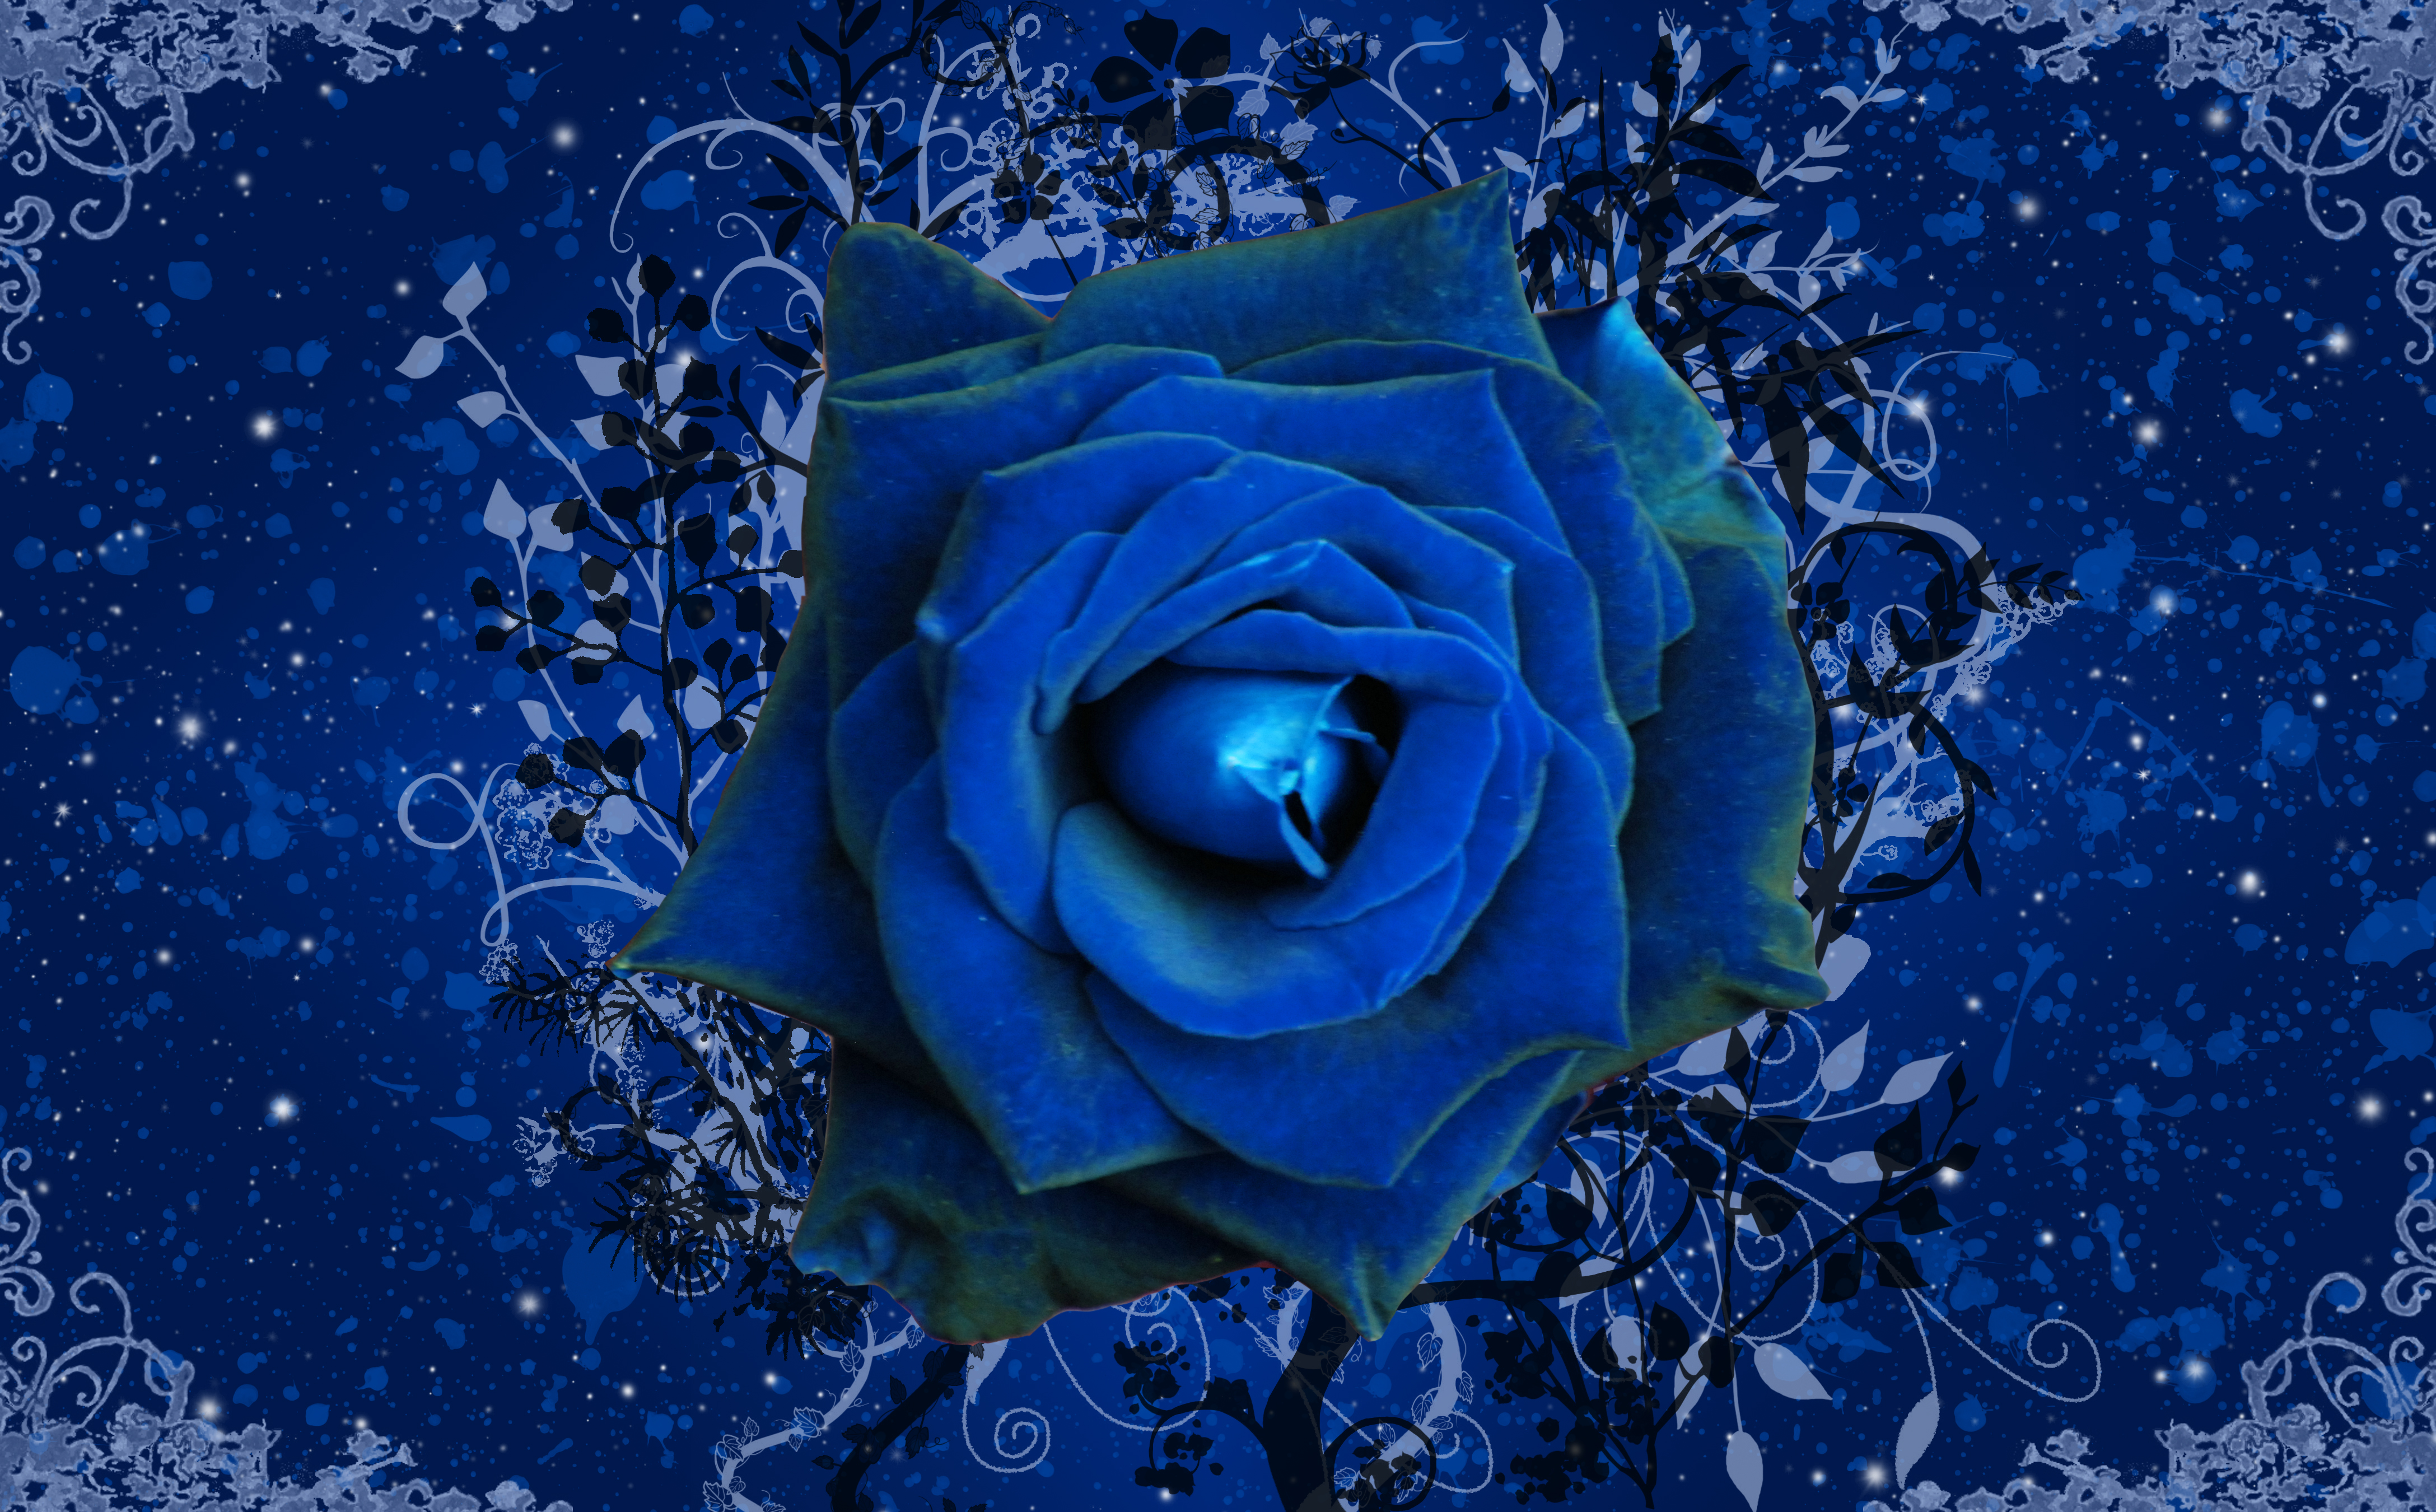 artistic, rose, blue flower, blue rose, flower